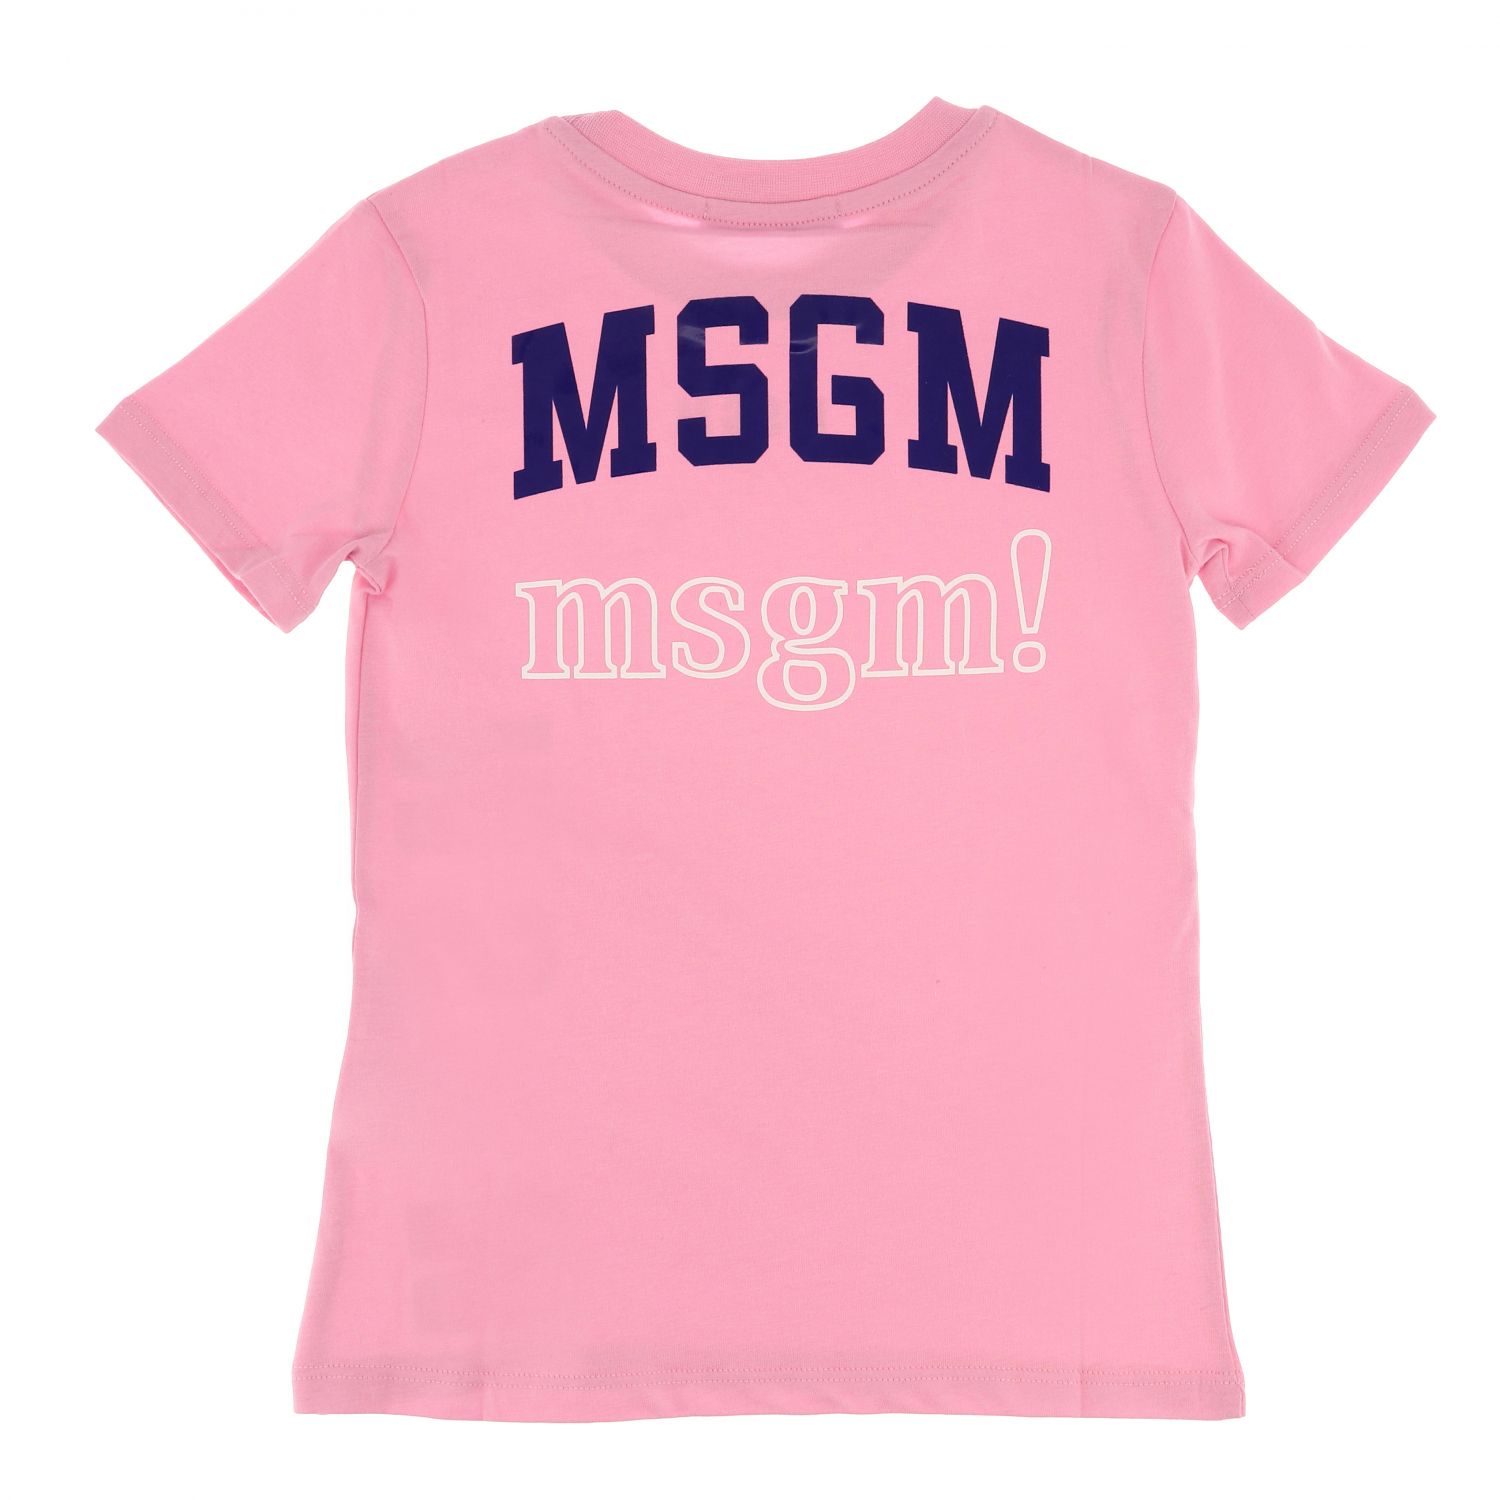 Msgm Kids Outlet: t-shirt for girls - Pink | Msgm Kids t-shirt 020296 ...